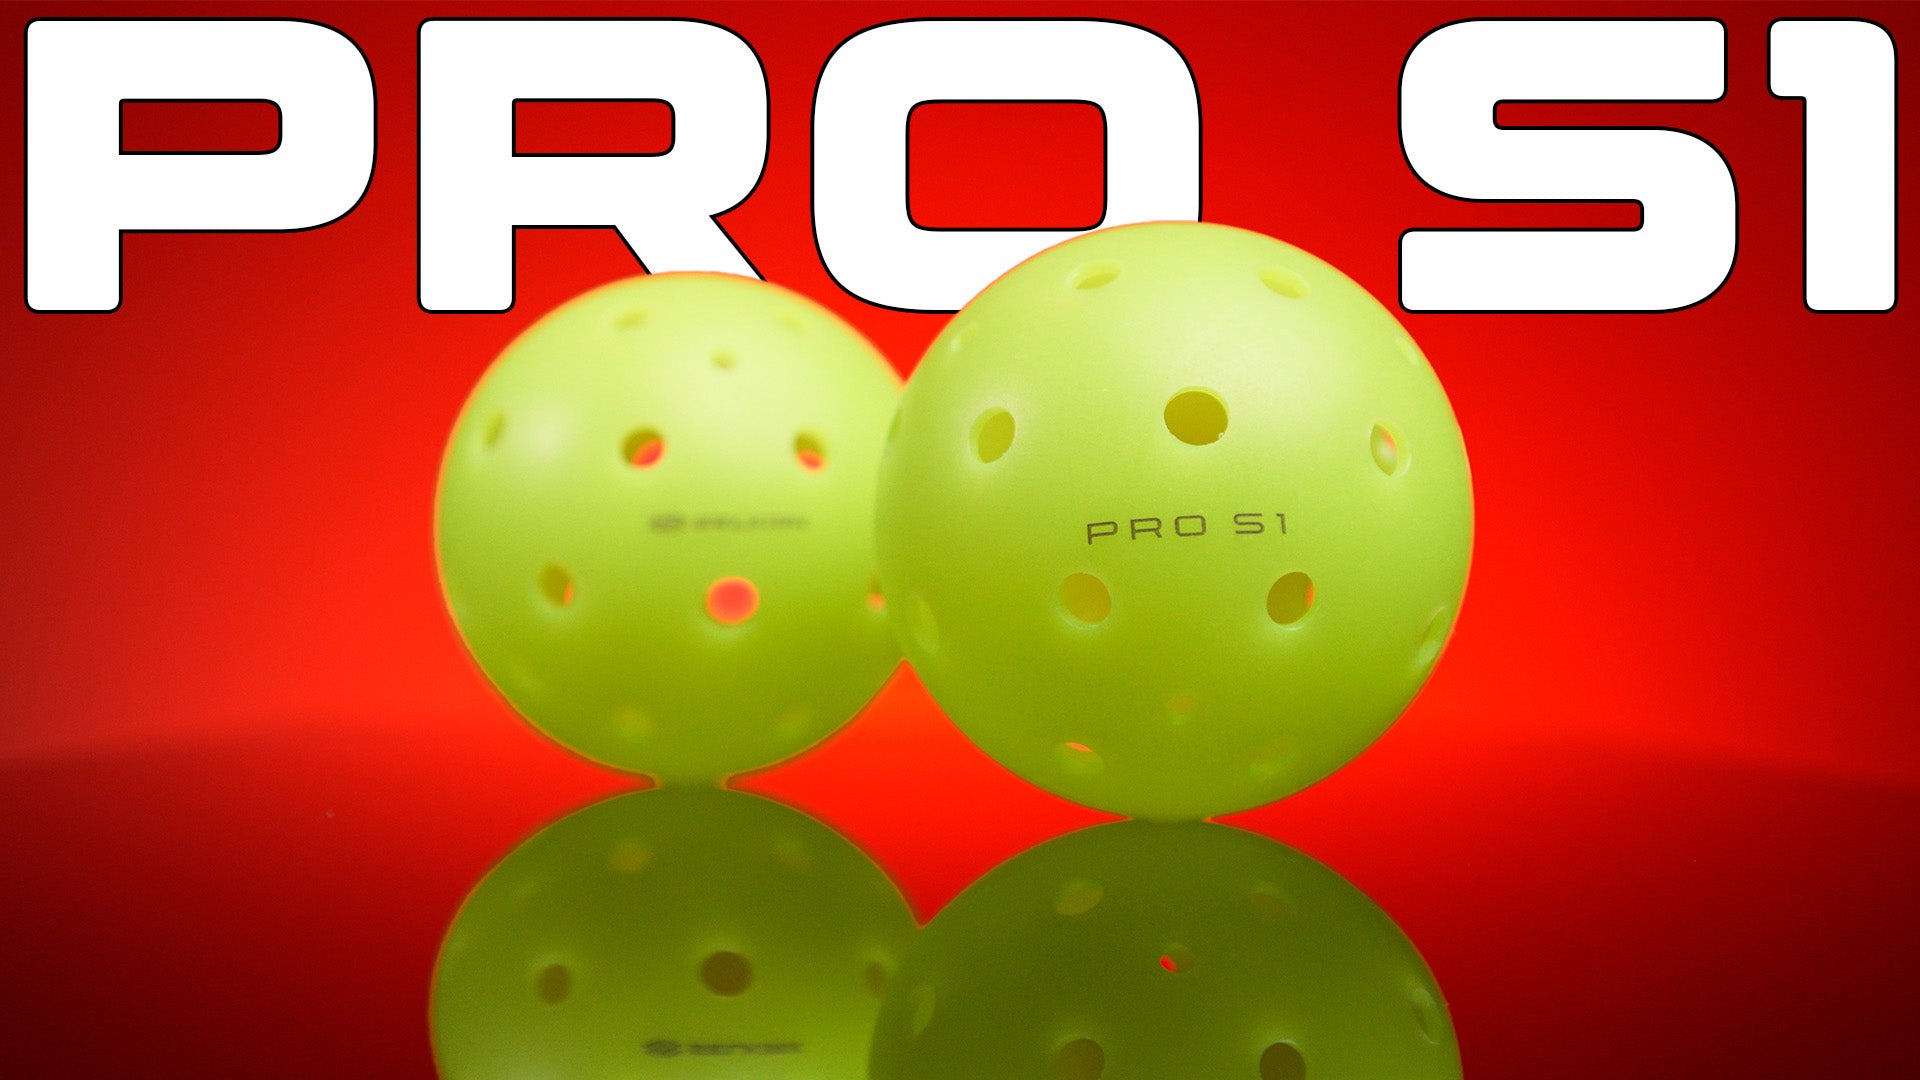 Selkirk Sport's NEW Pro S1 Pickleball Ball - A New Standard thumbnail image